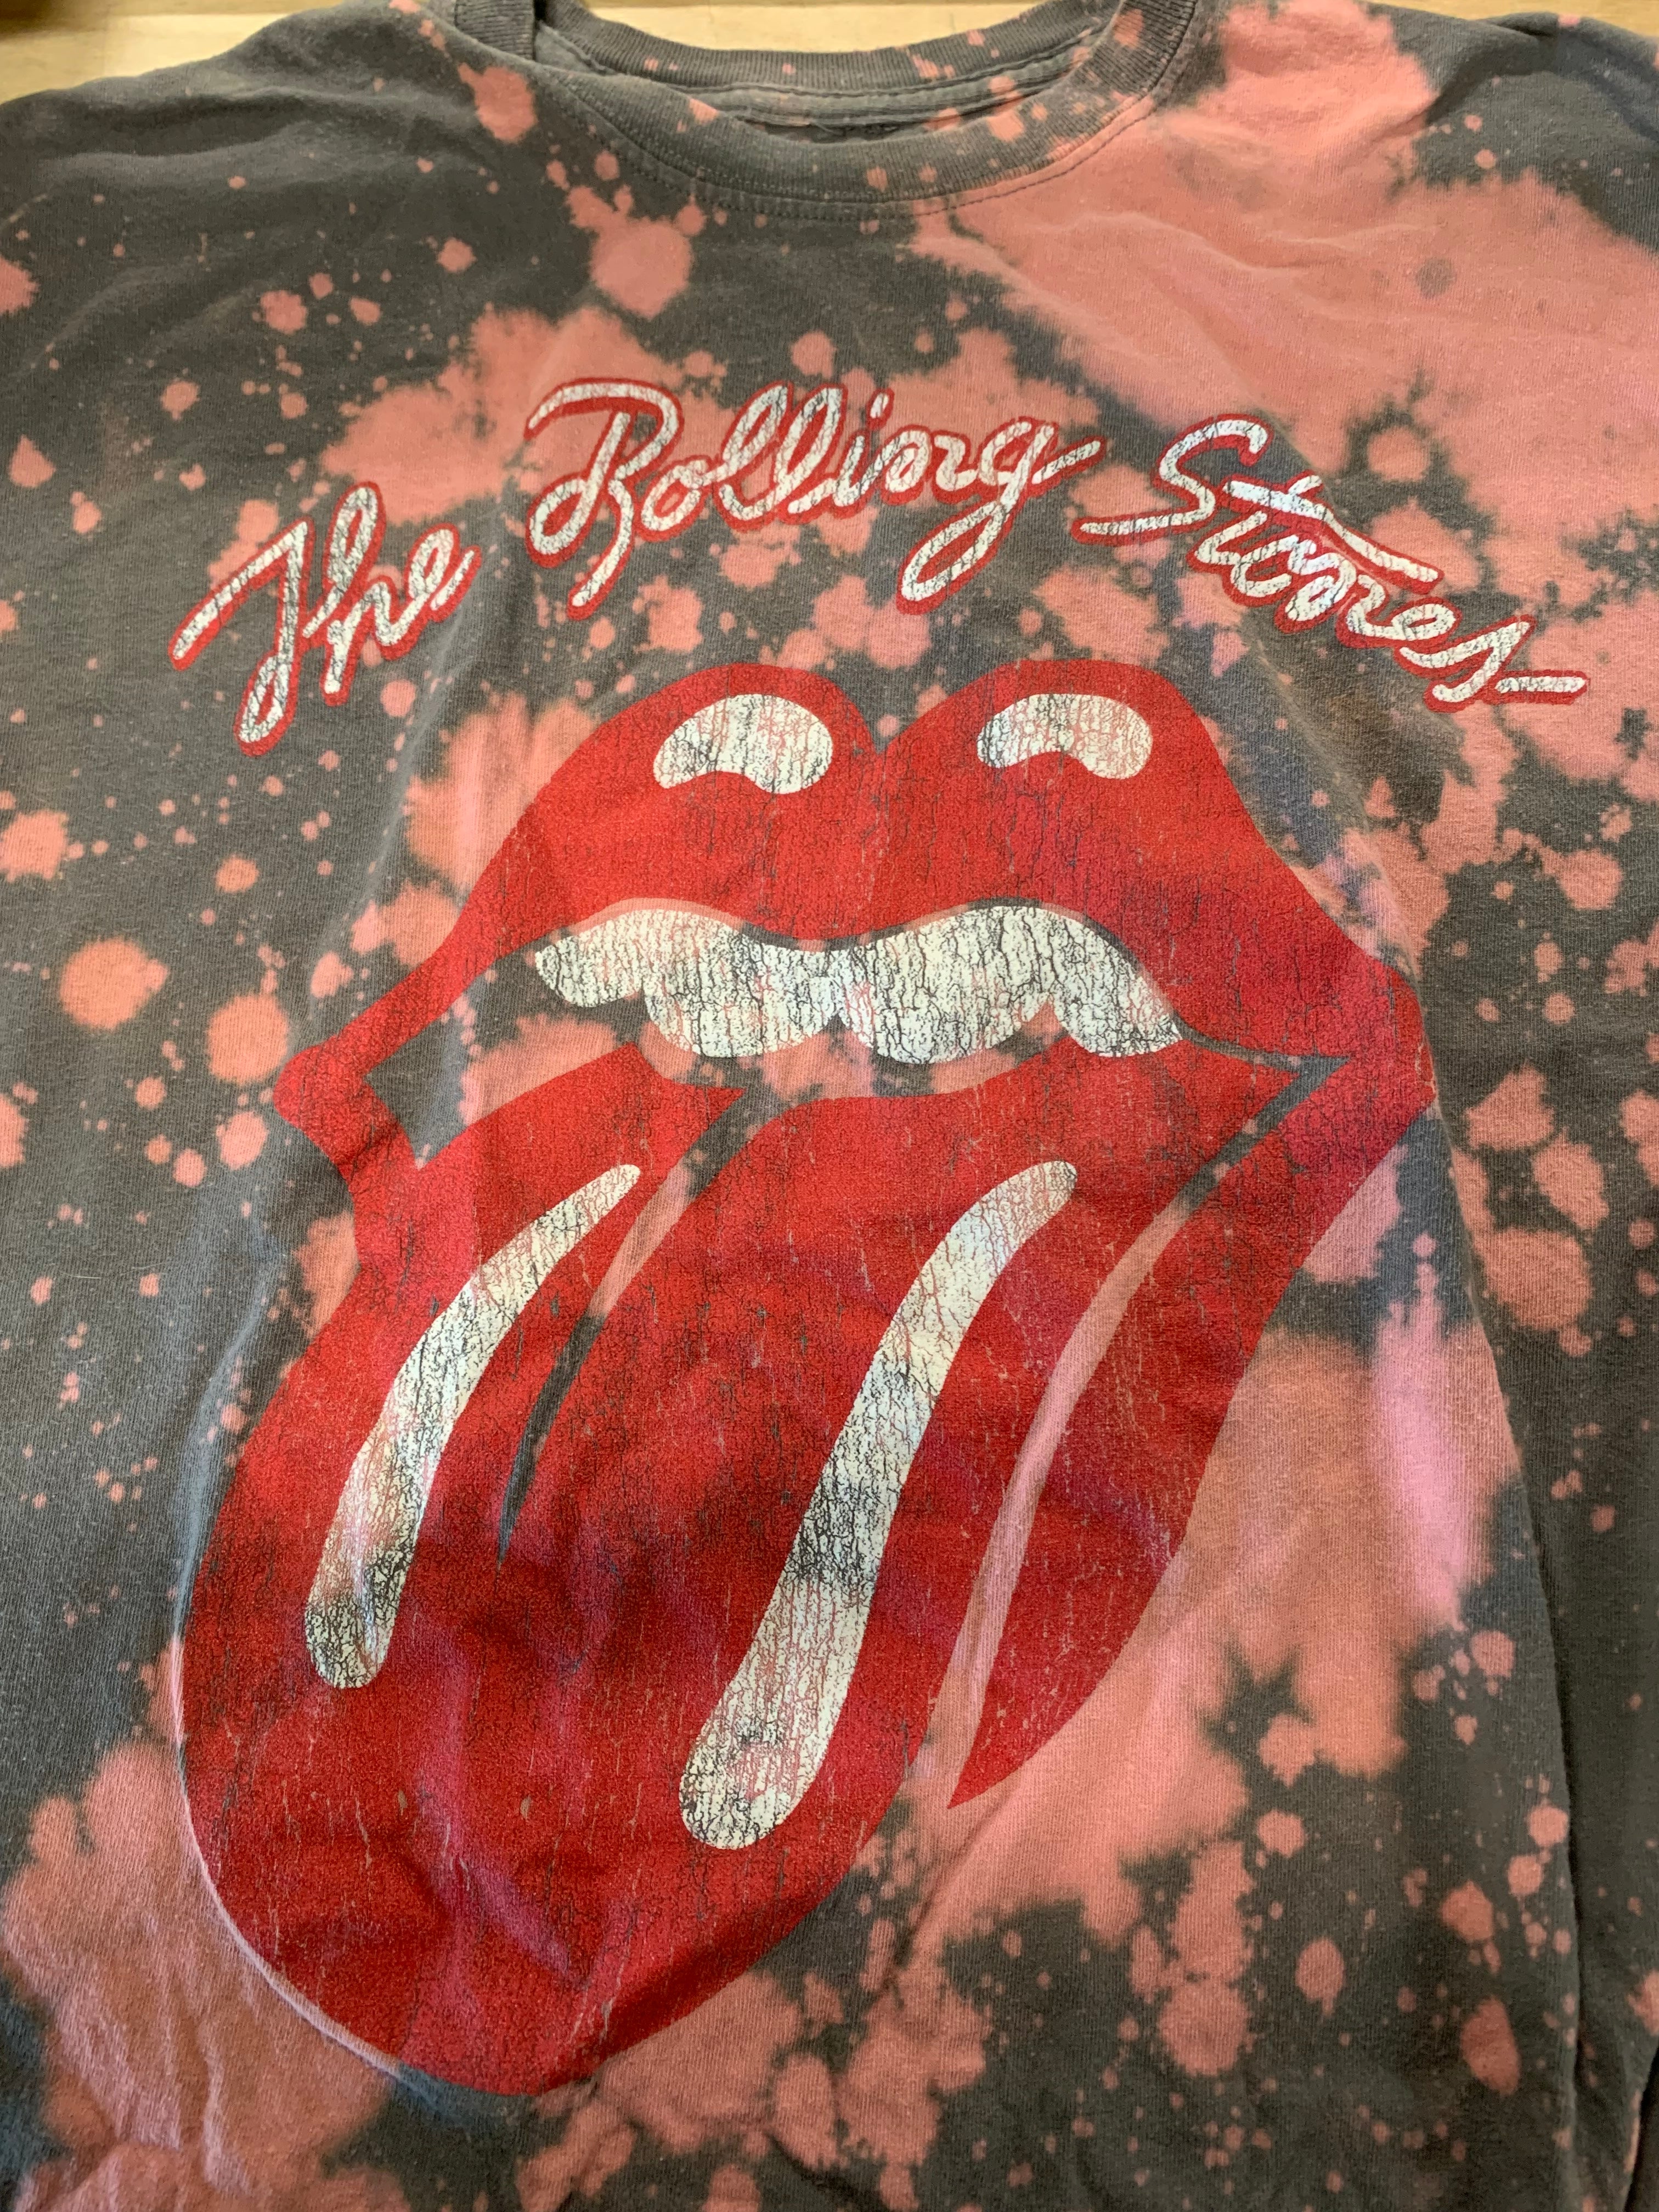 Rolling Stones Logo T-Shirt, Gray W/ Pink Splatter, L